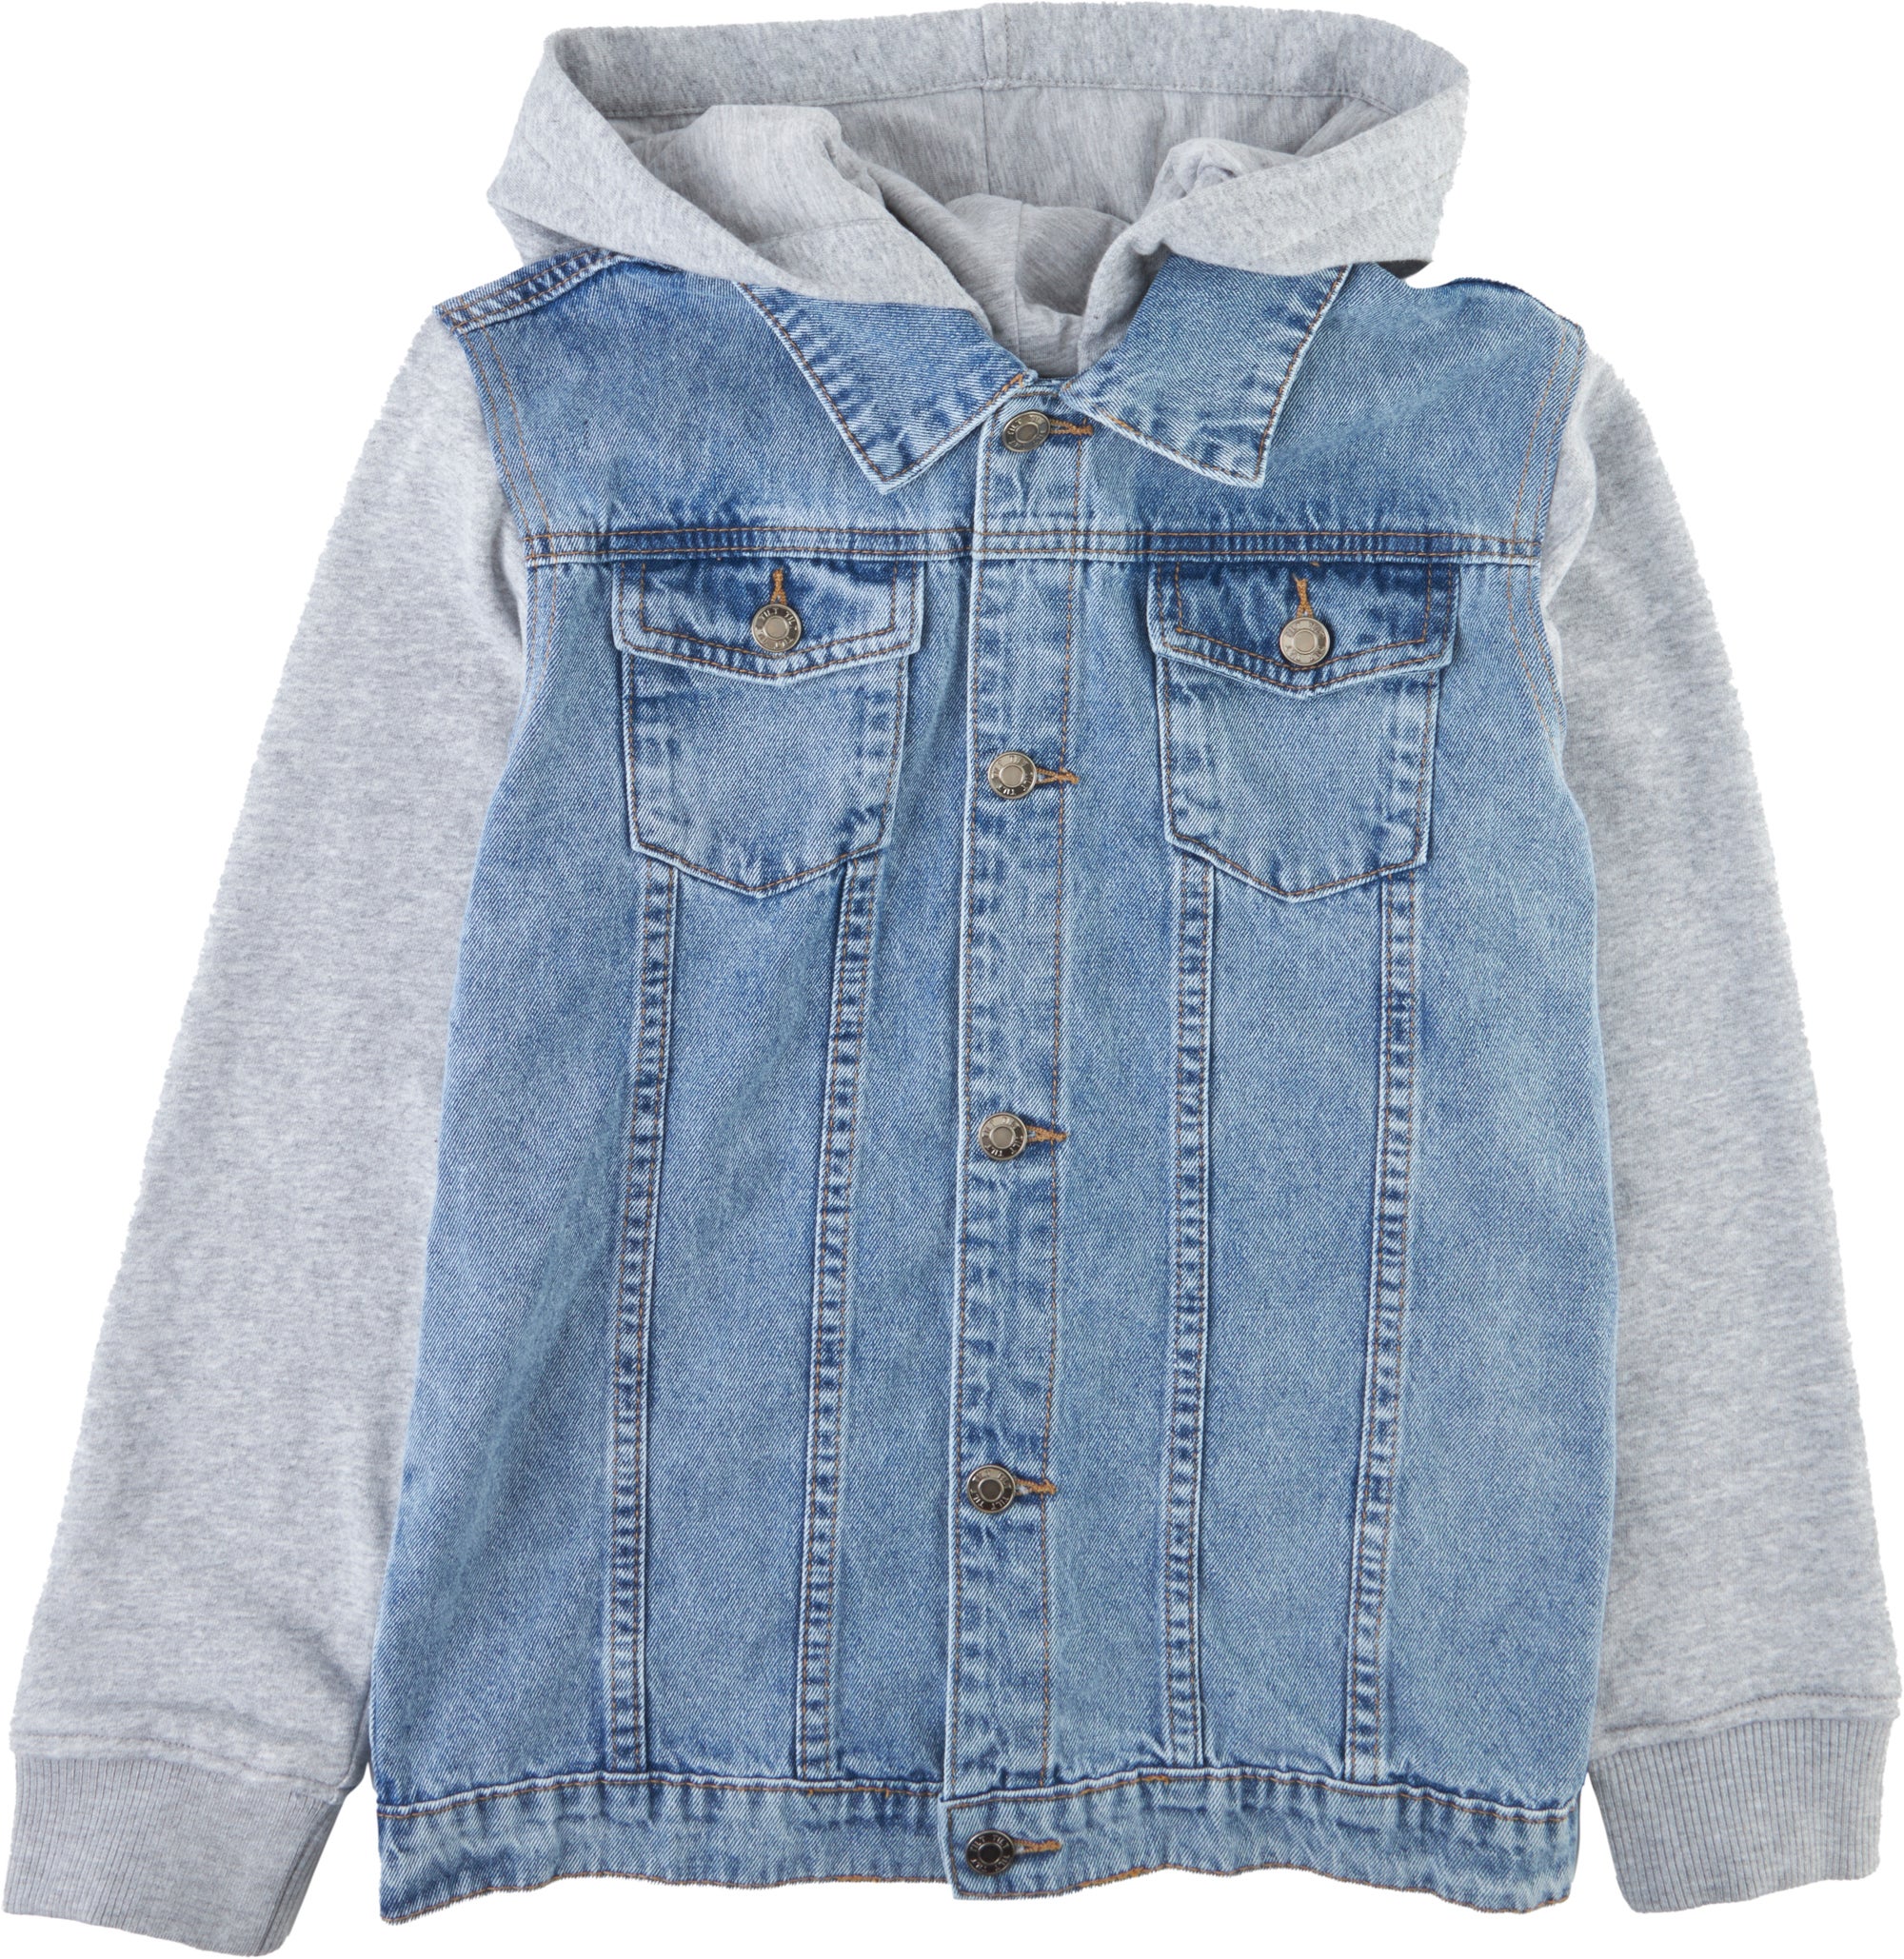 Kids' Hooded Denim Jacket in Light Denim/grey | Postie